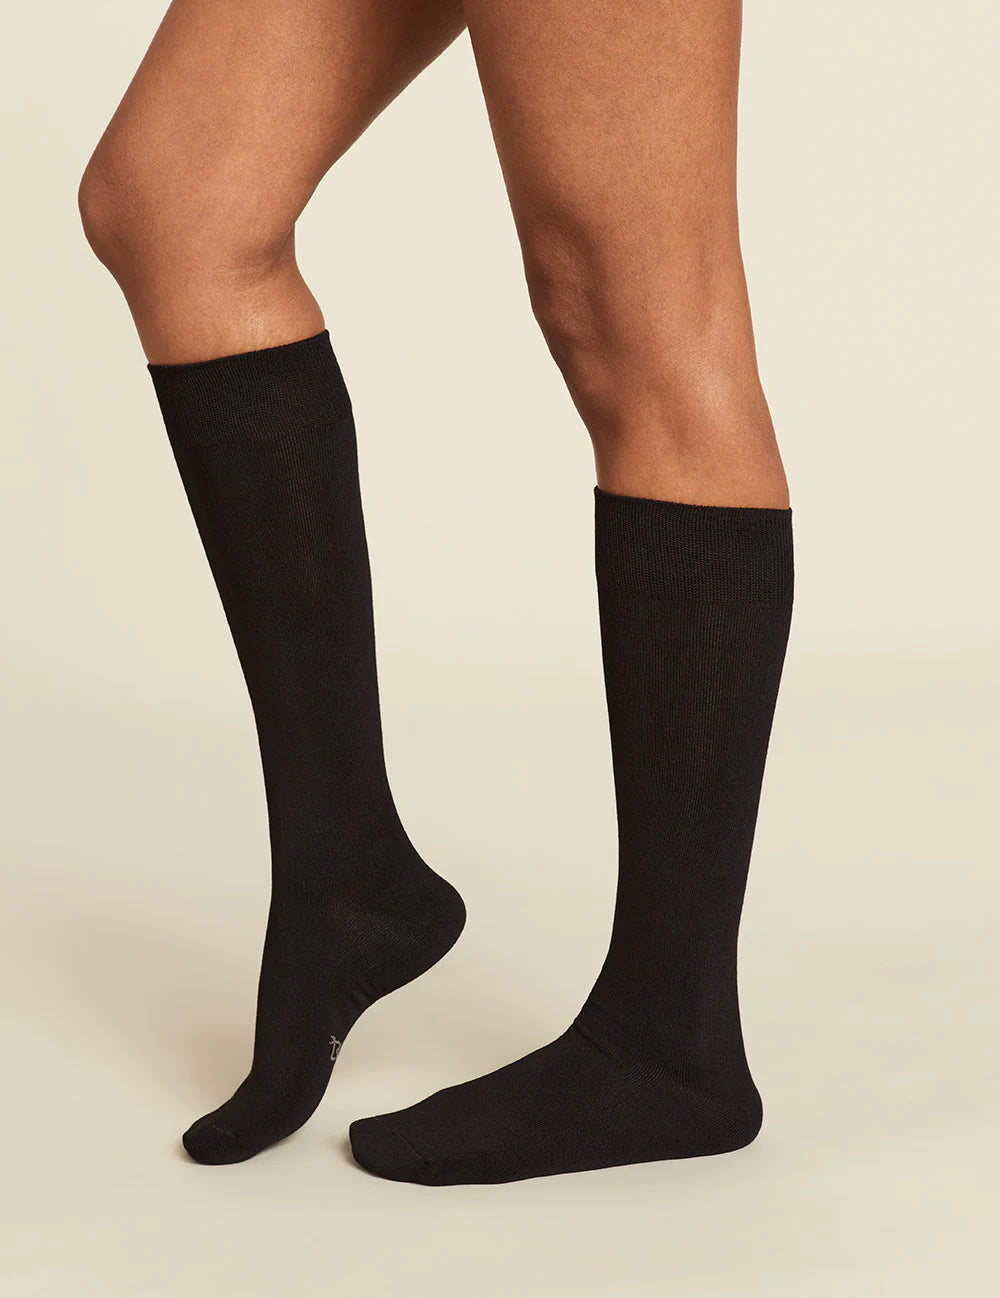 Plain Knee High School Socks Pack Of 3 - Storm Desire